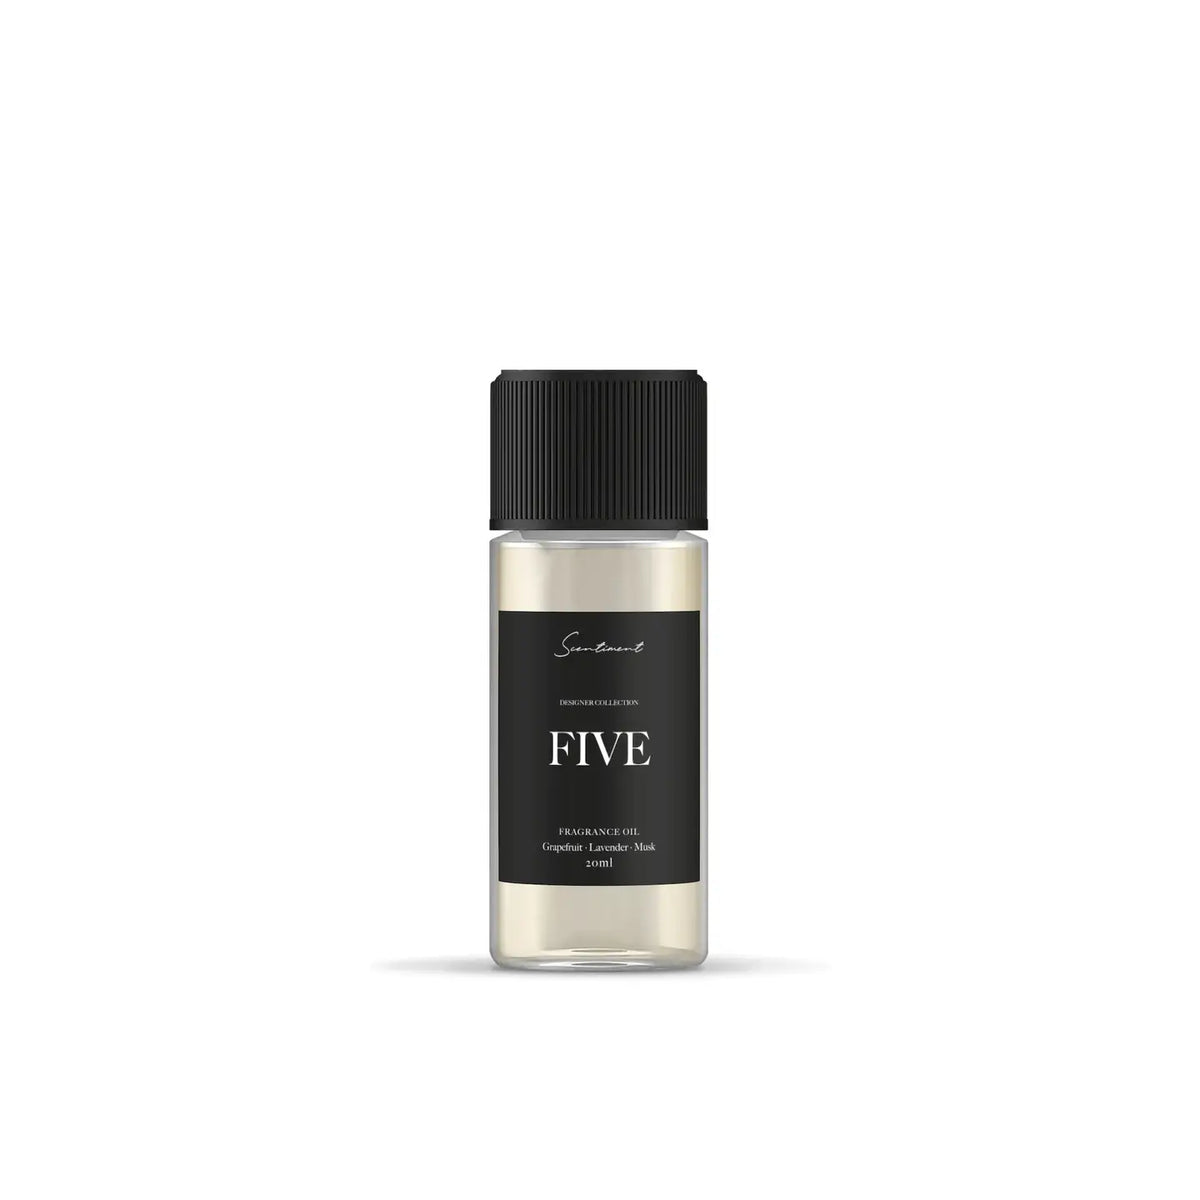 Five - Jasmine & Lavender Fragrance Oil, grapefruit, lavender, bergamot, jasmine, cedar, musk, sandalwood